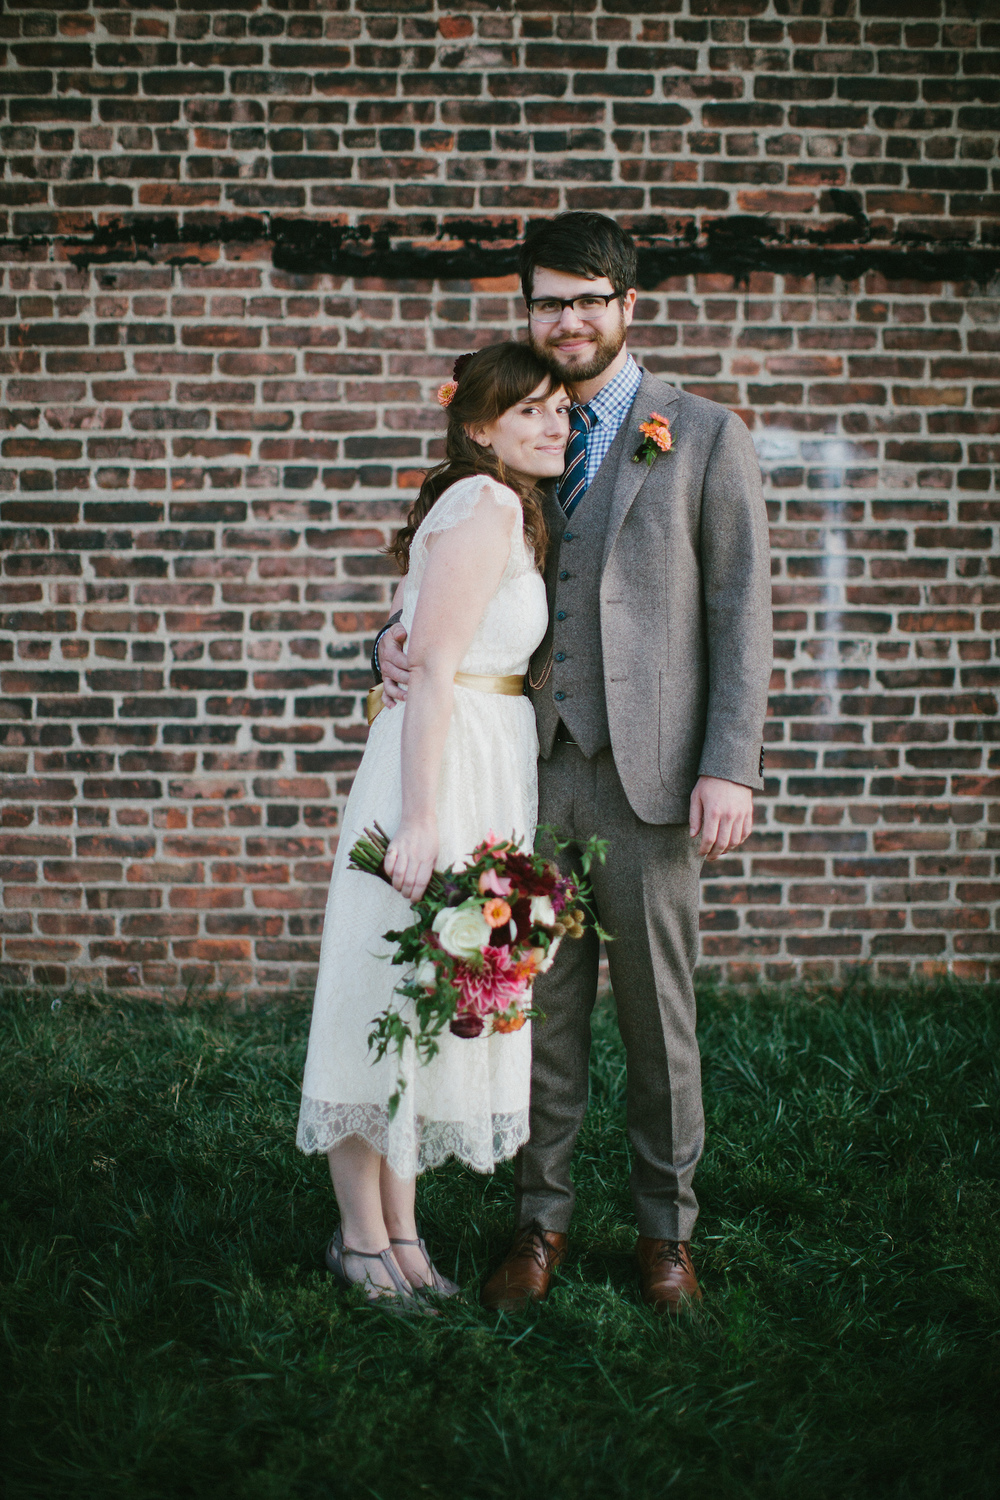 Full Aperture Floral & Corey Torpie Photography  - Brooklyn Wedding - 70.jpeg